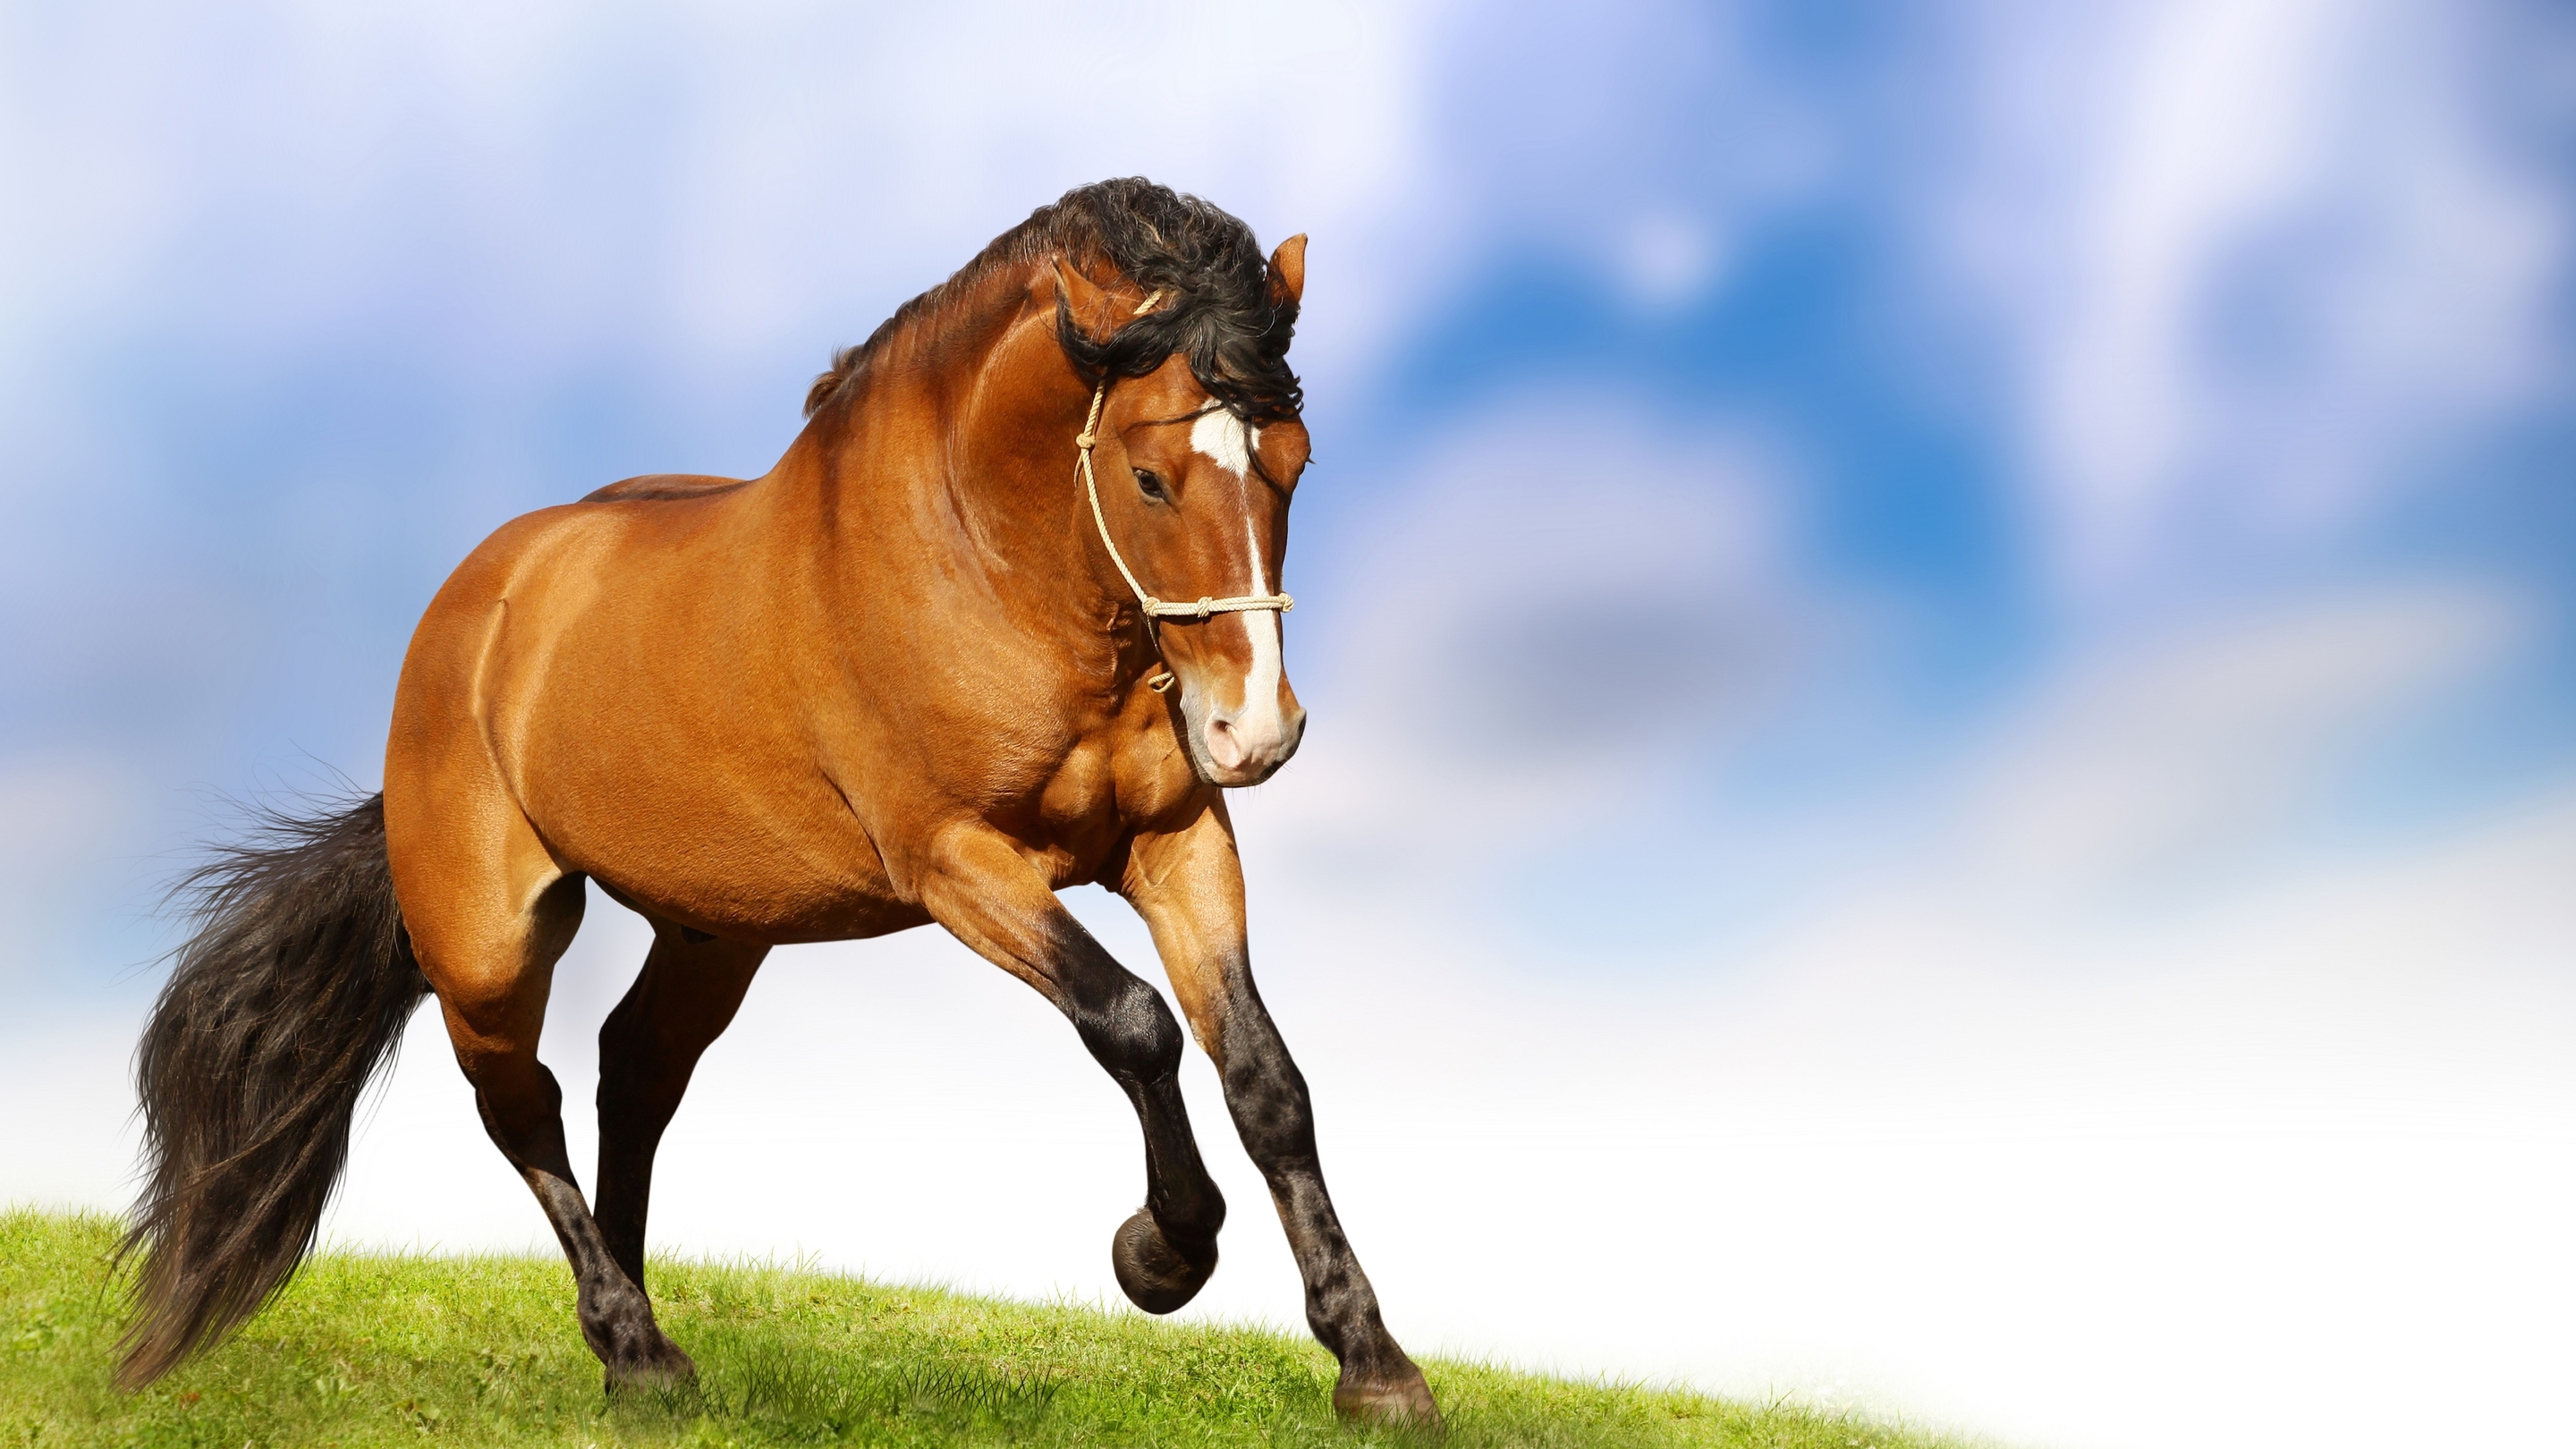 Картинка: Конь, лошадь, скакун, трава, небо